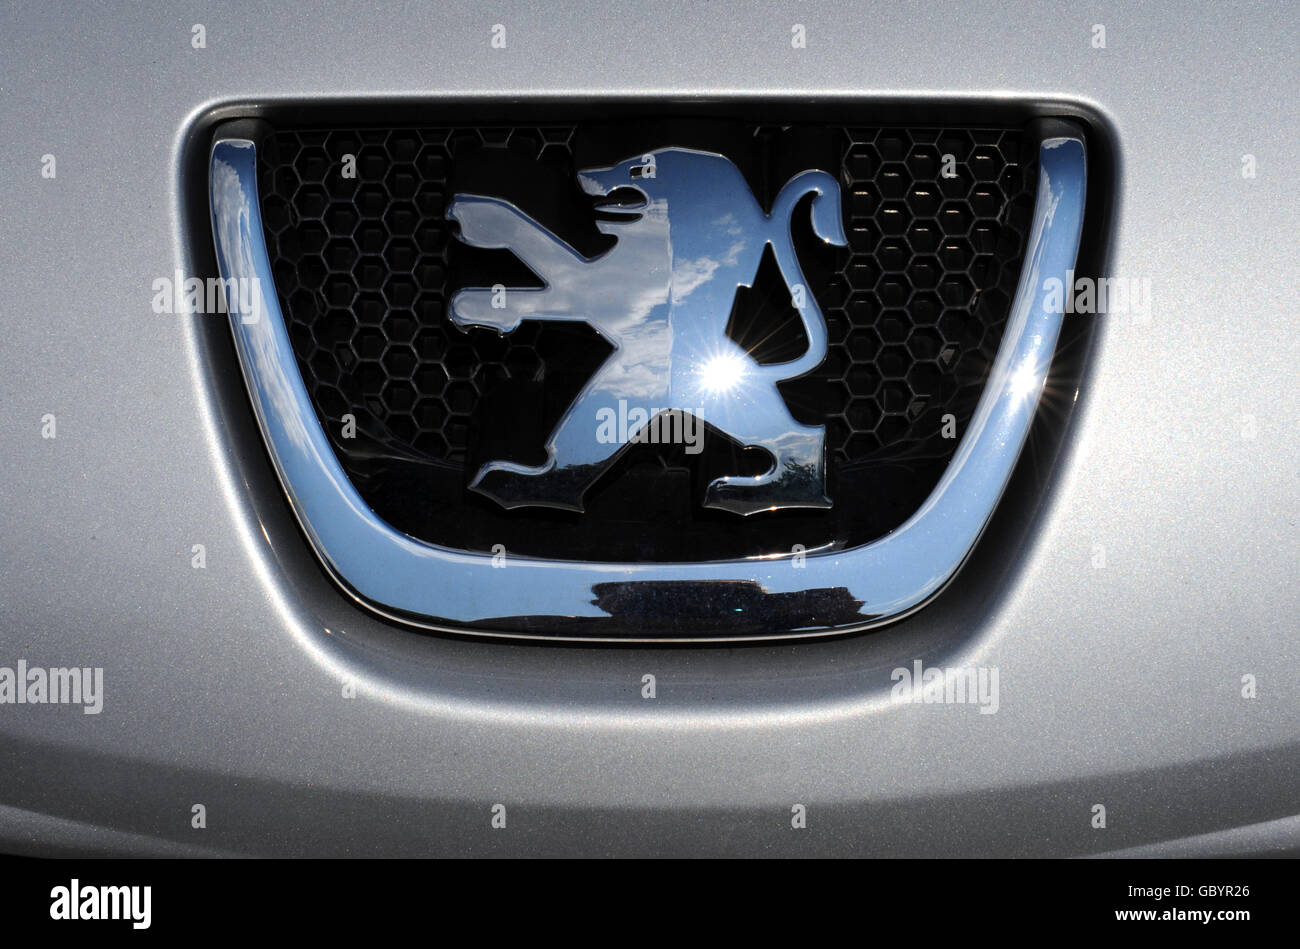 File:Peugeot 307 CC Facelift rear.jpg - Wikimedia Commons